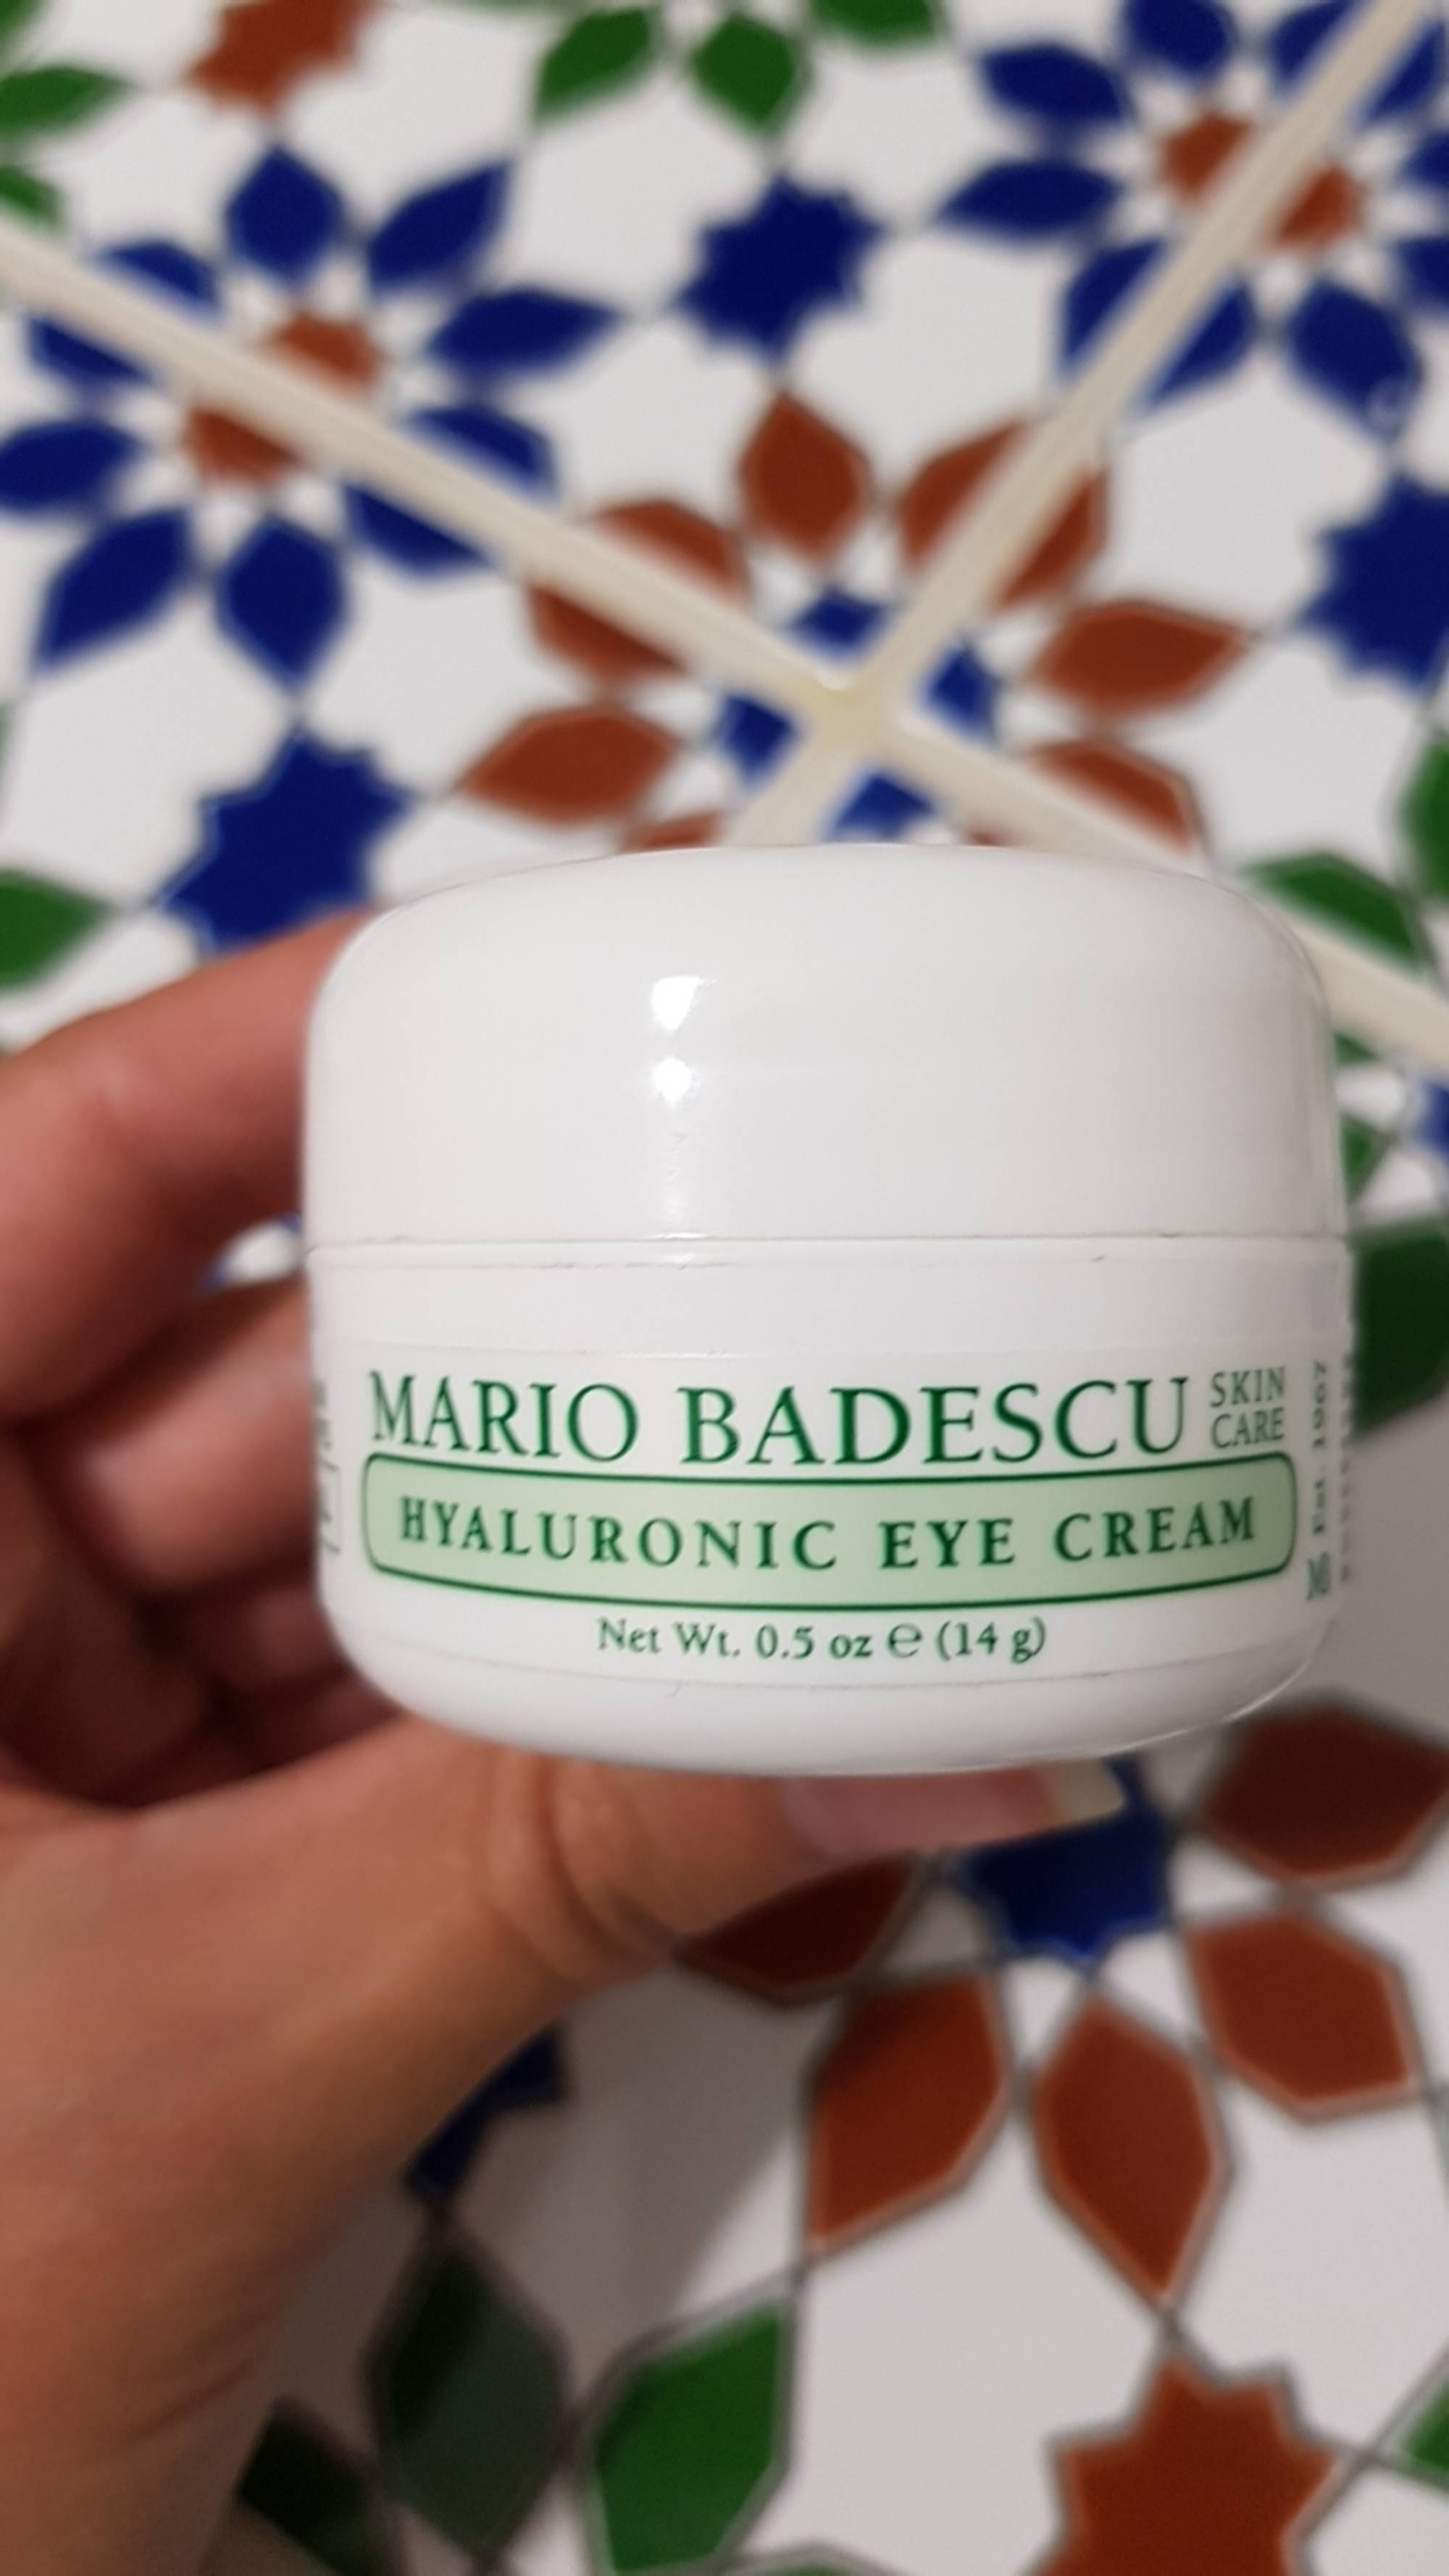 MARIO BADESCU - Skin care - Hyaluronic eye cream